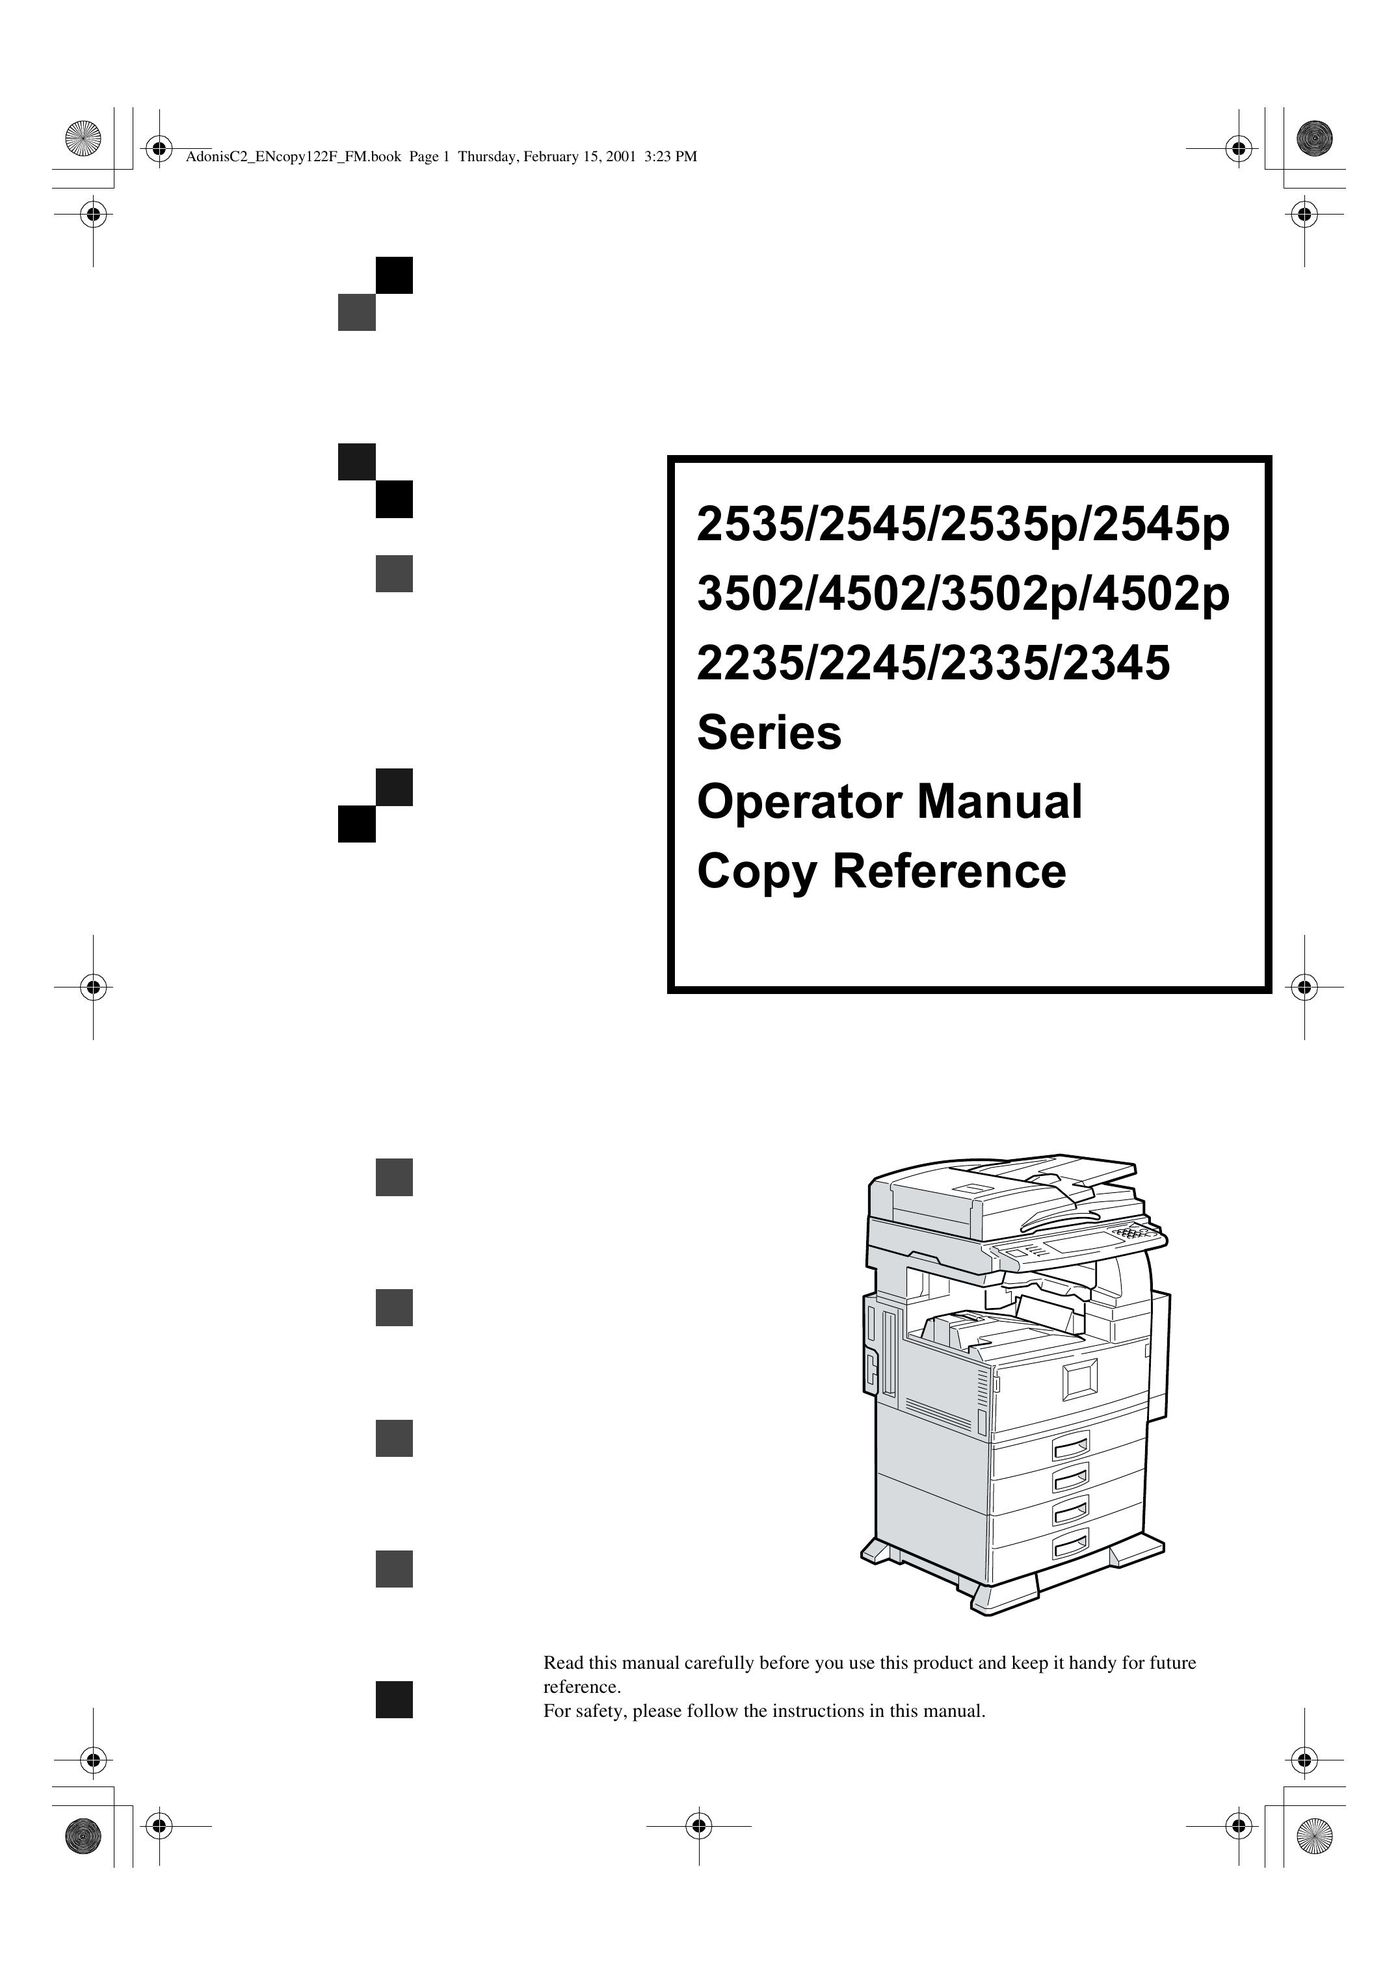 Savin 2545/2545p All in One Printer User Manual